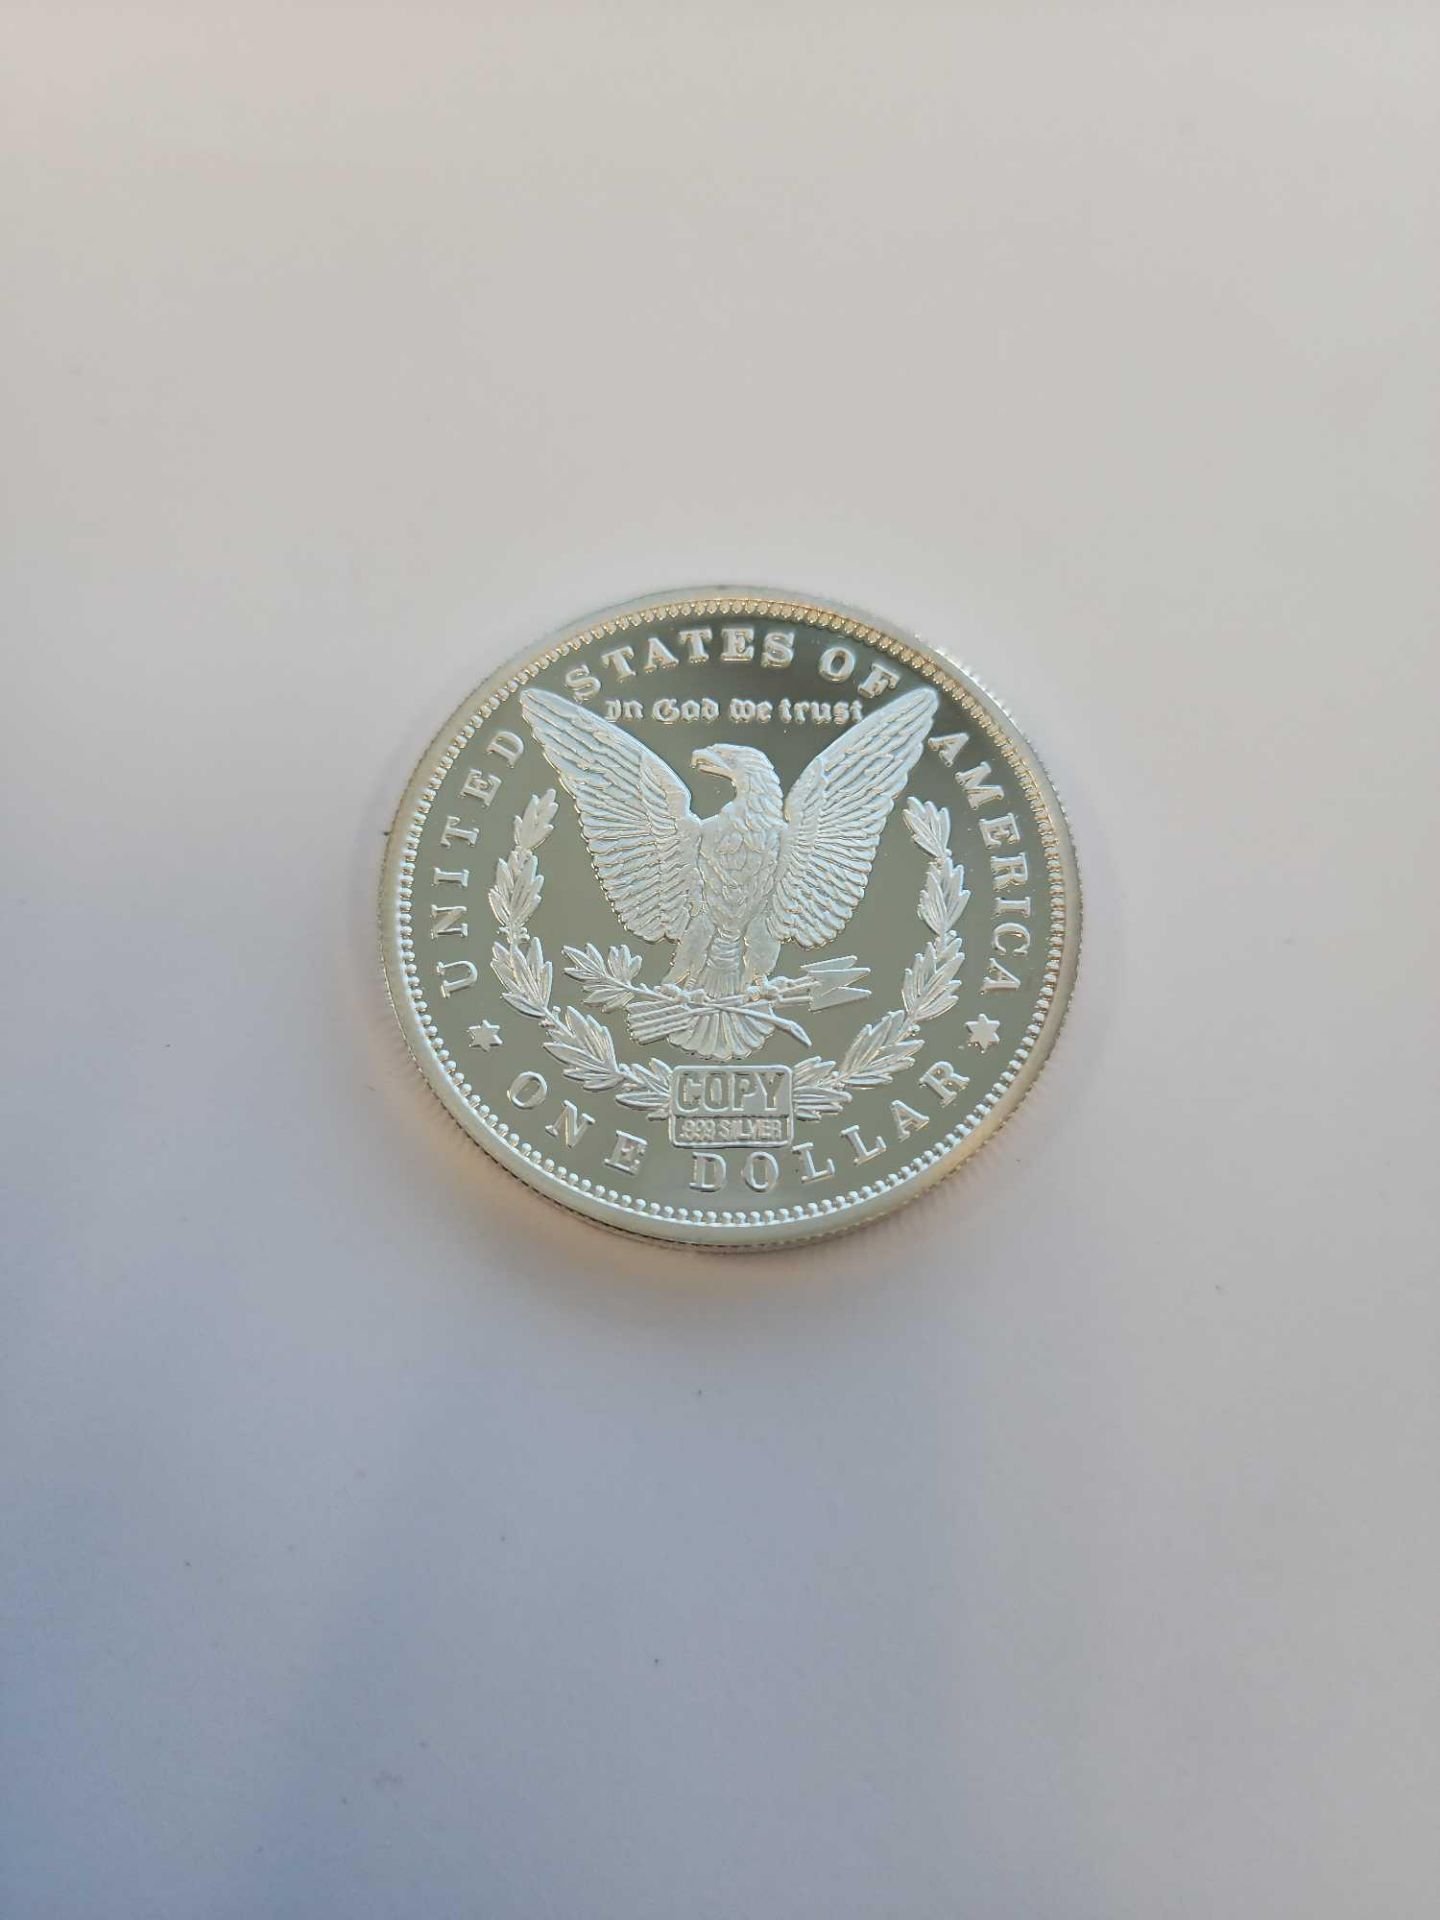 2 oz Silver Morgan Dollar Replica - Image 2 of 3